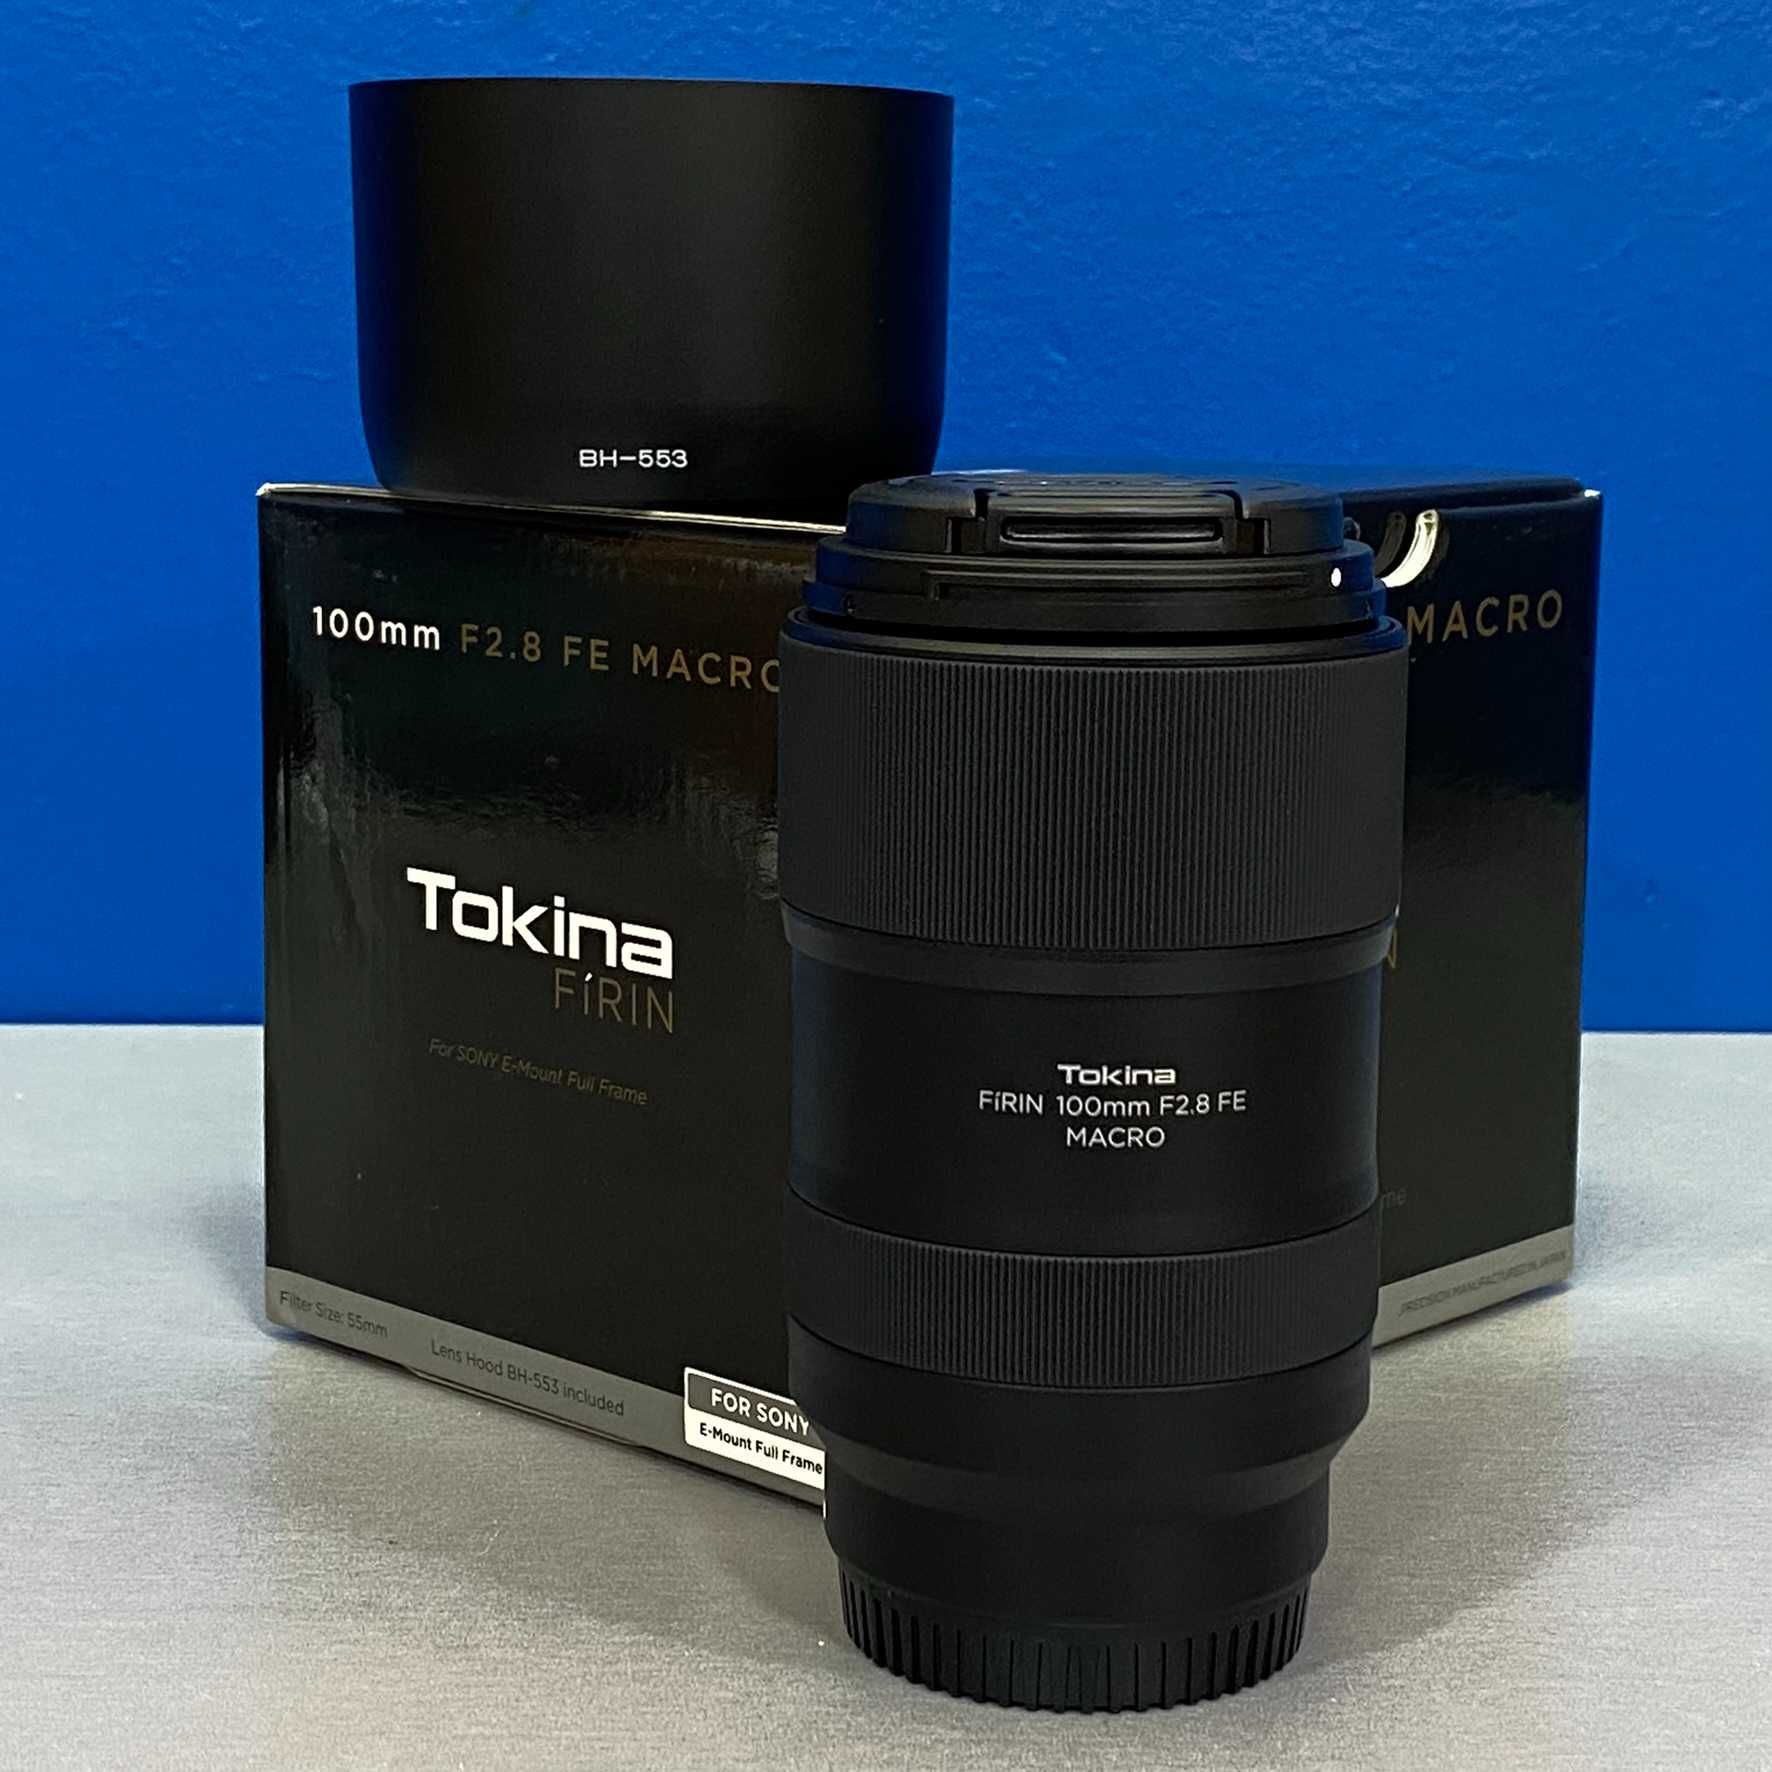 Tokina FiRIN 100mm f/2.8 Macro (Sony FE) - NOVA - 3 ANOS DE GARANTIA